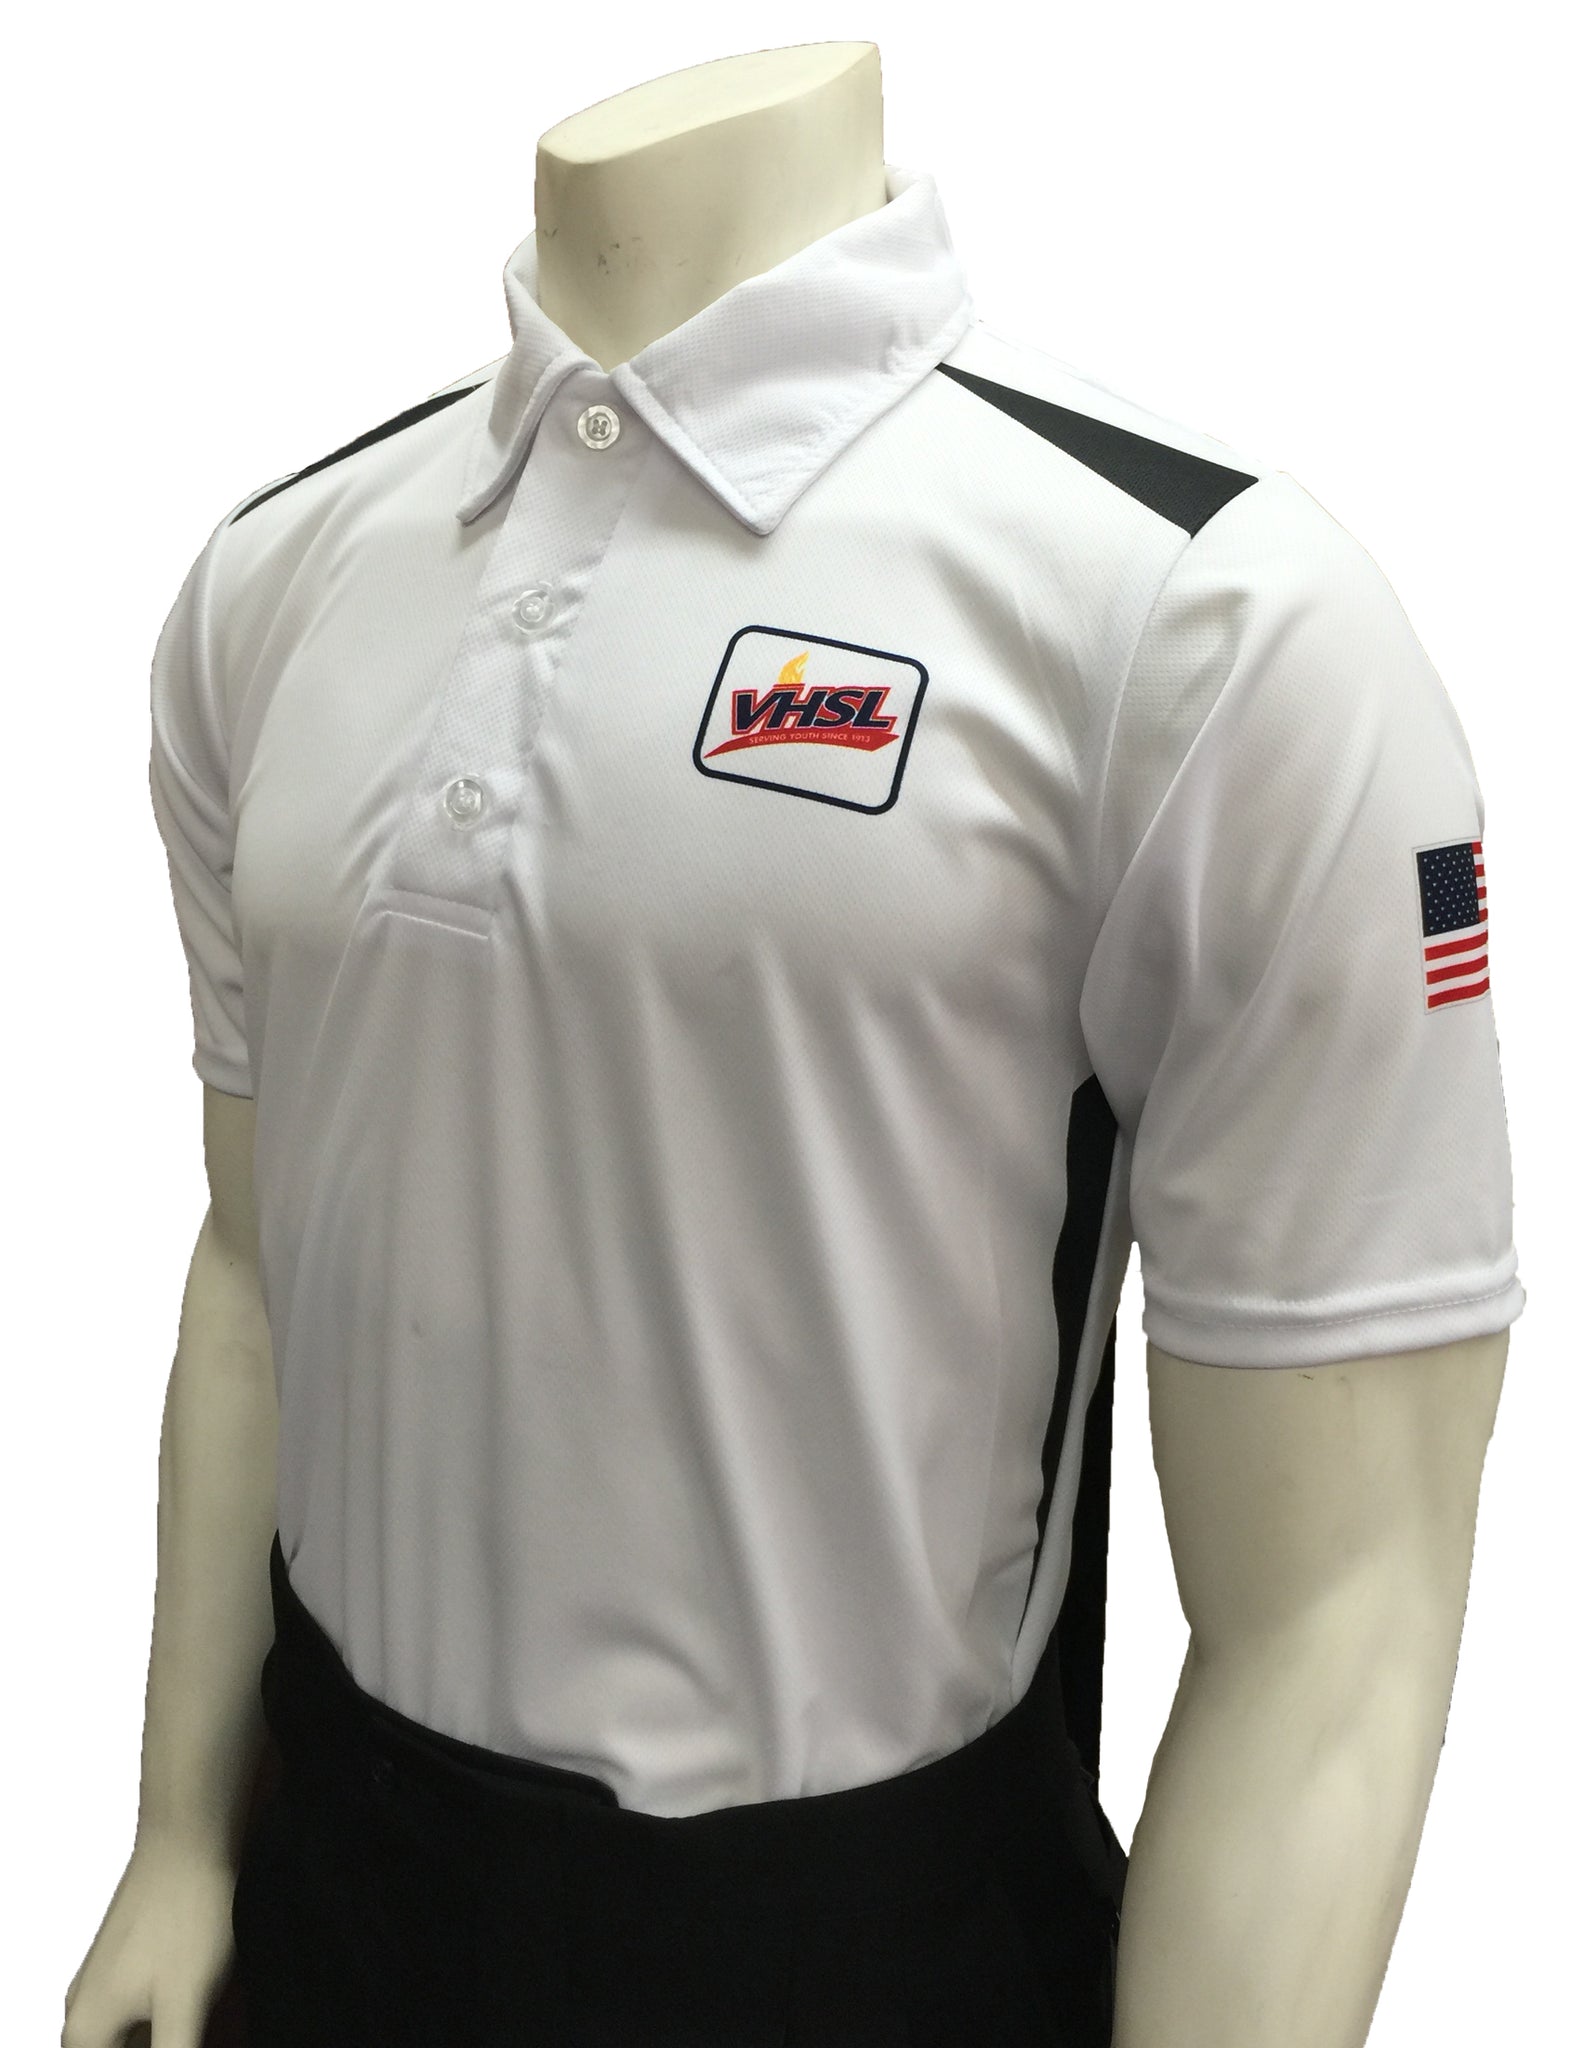 USA437VA - Smitty "Made in USA"  - Volleyball/Swimming Men's Short Sleeve Shirt